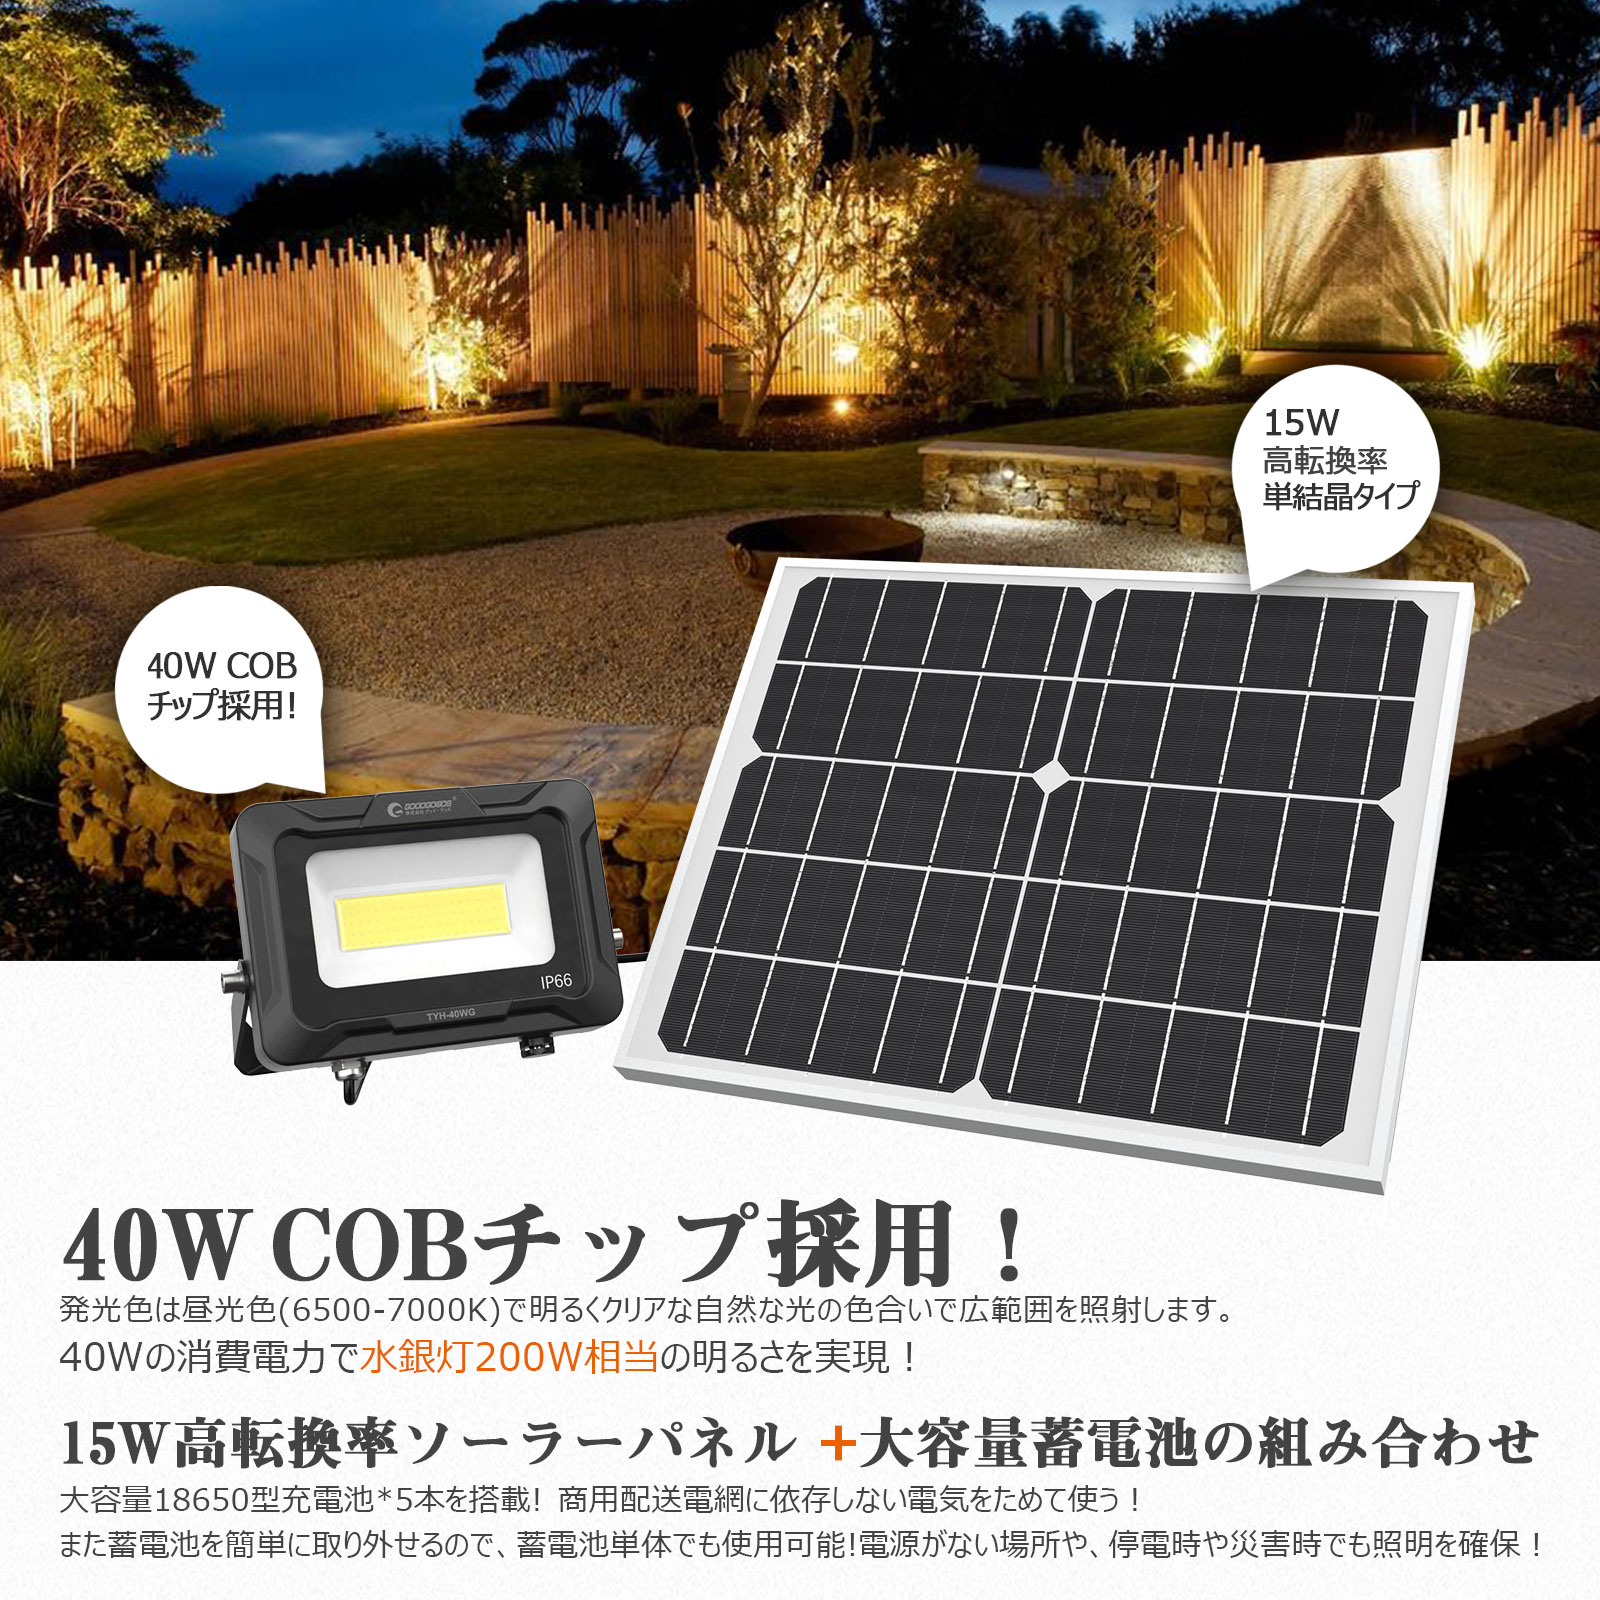 SALE ソーラーライト LED投光器 40W 屋外 防水 高輝度 分離型 太陽